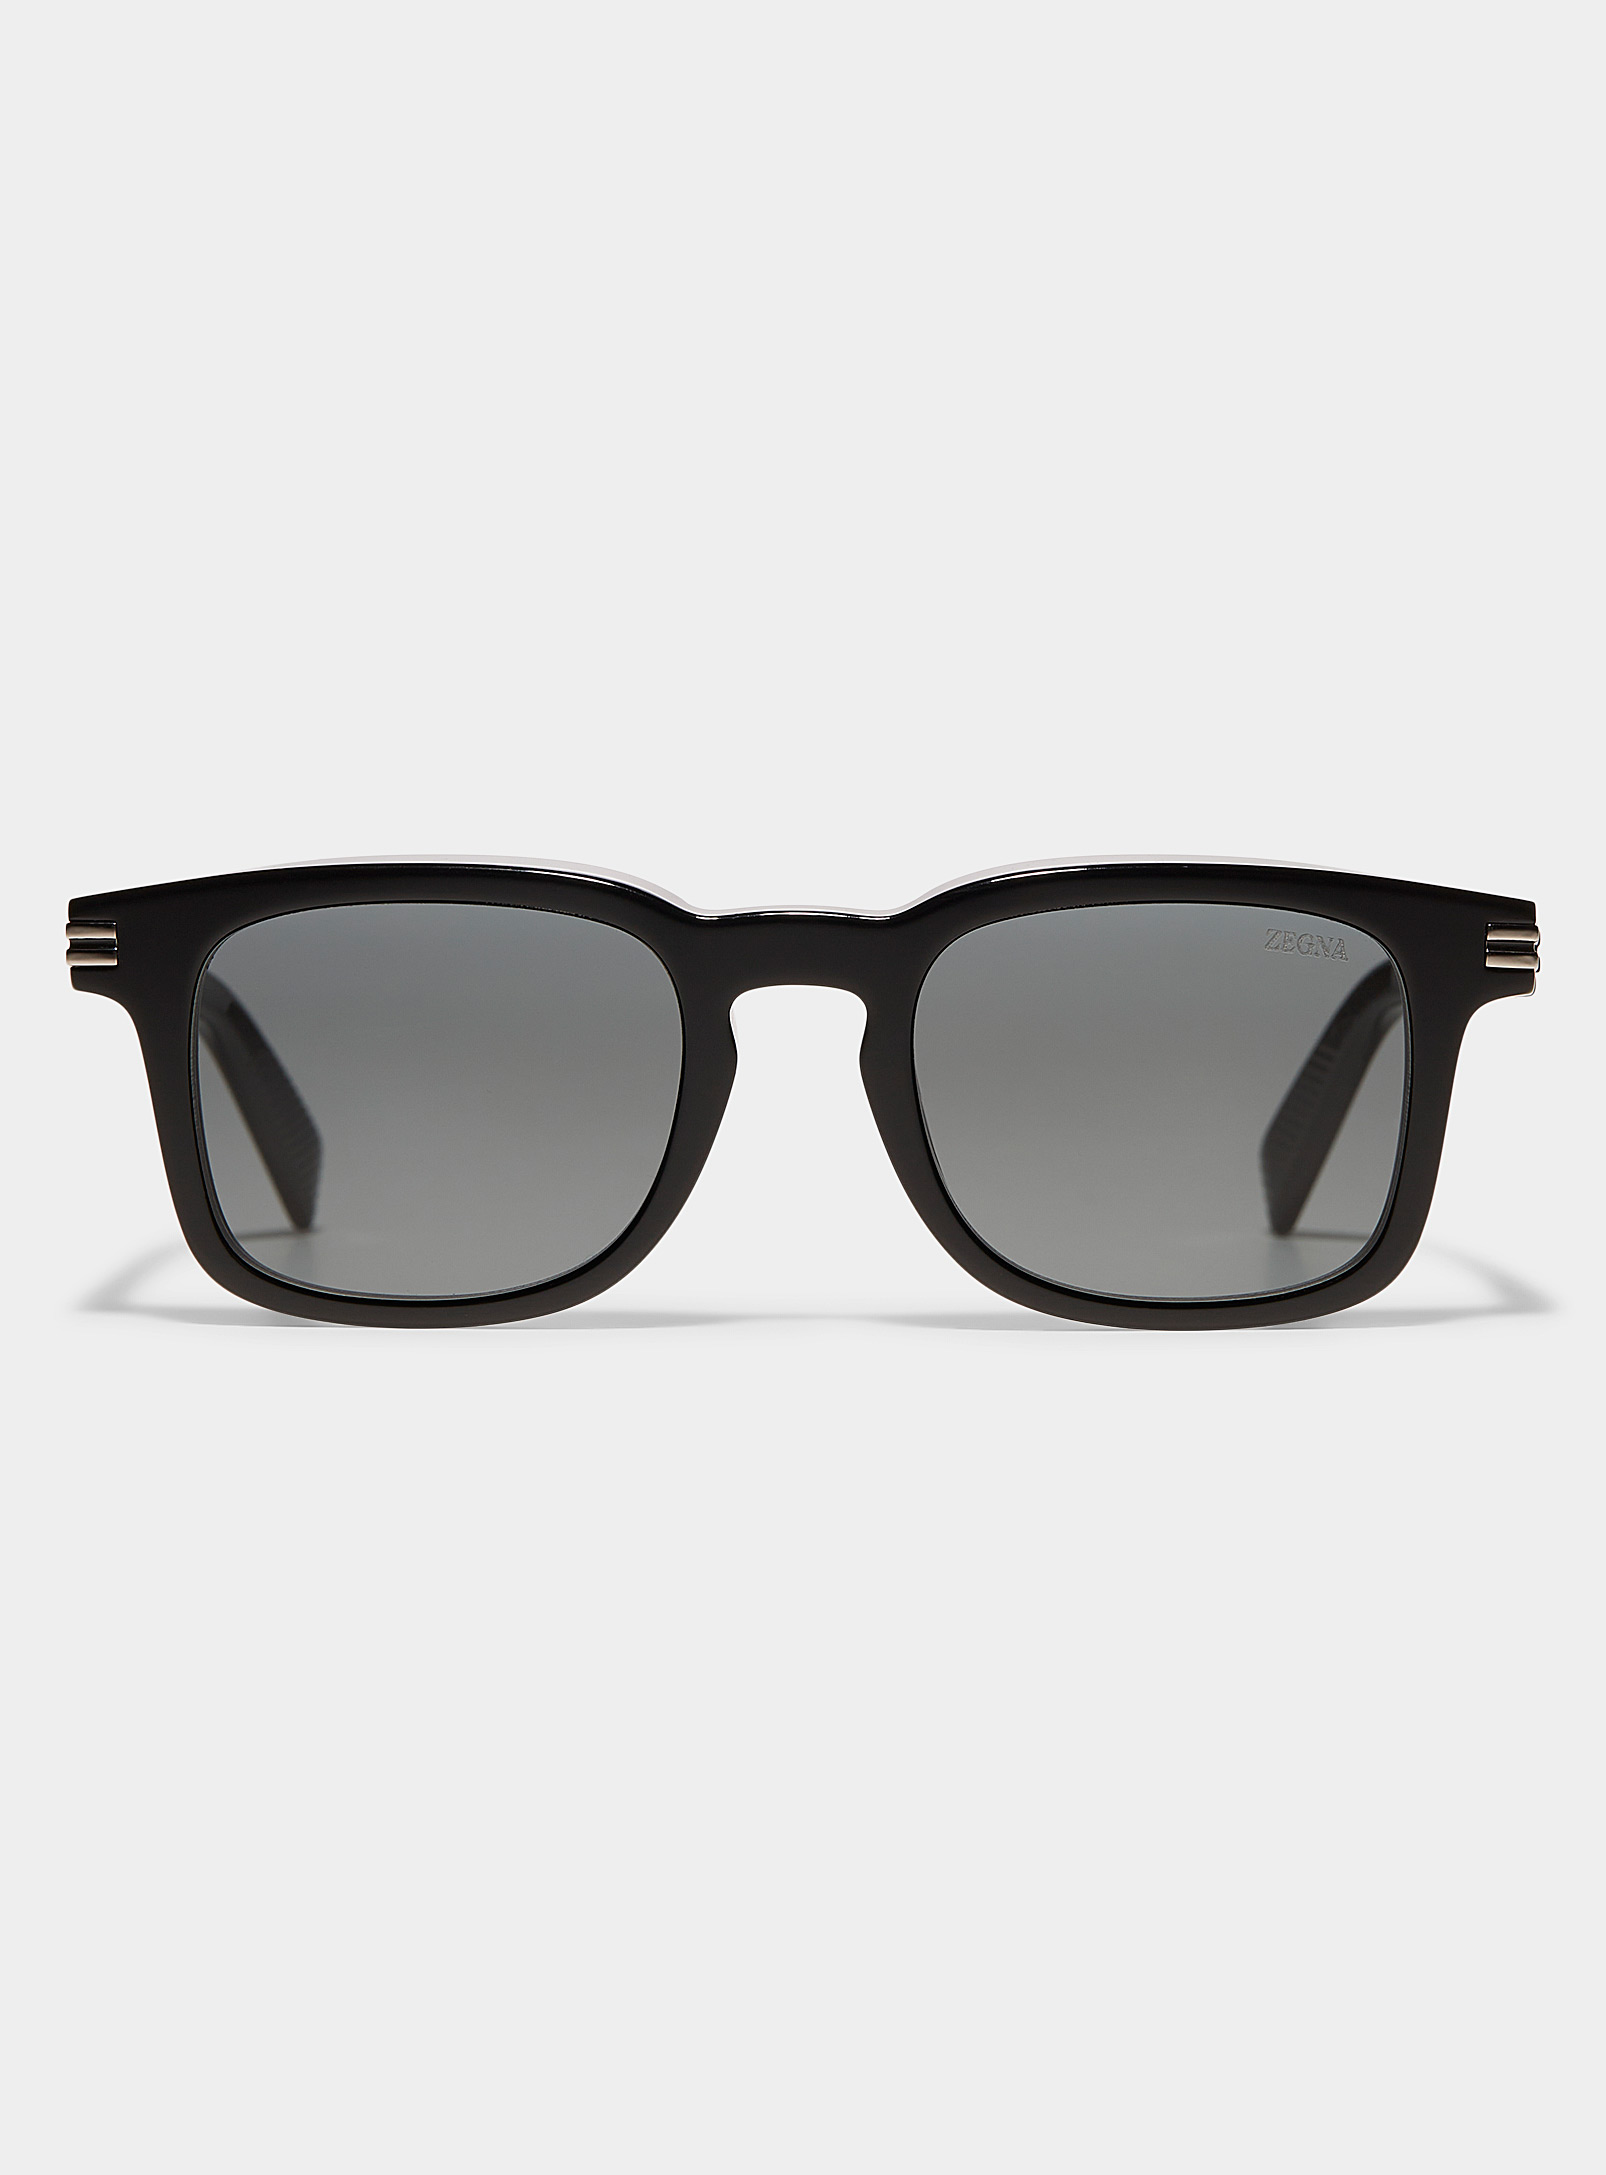 Zegna Wayfarer Black Sunglasses